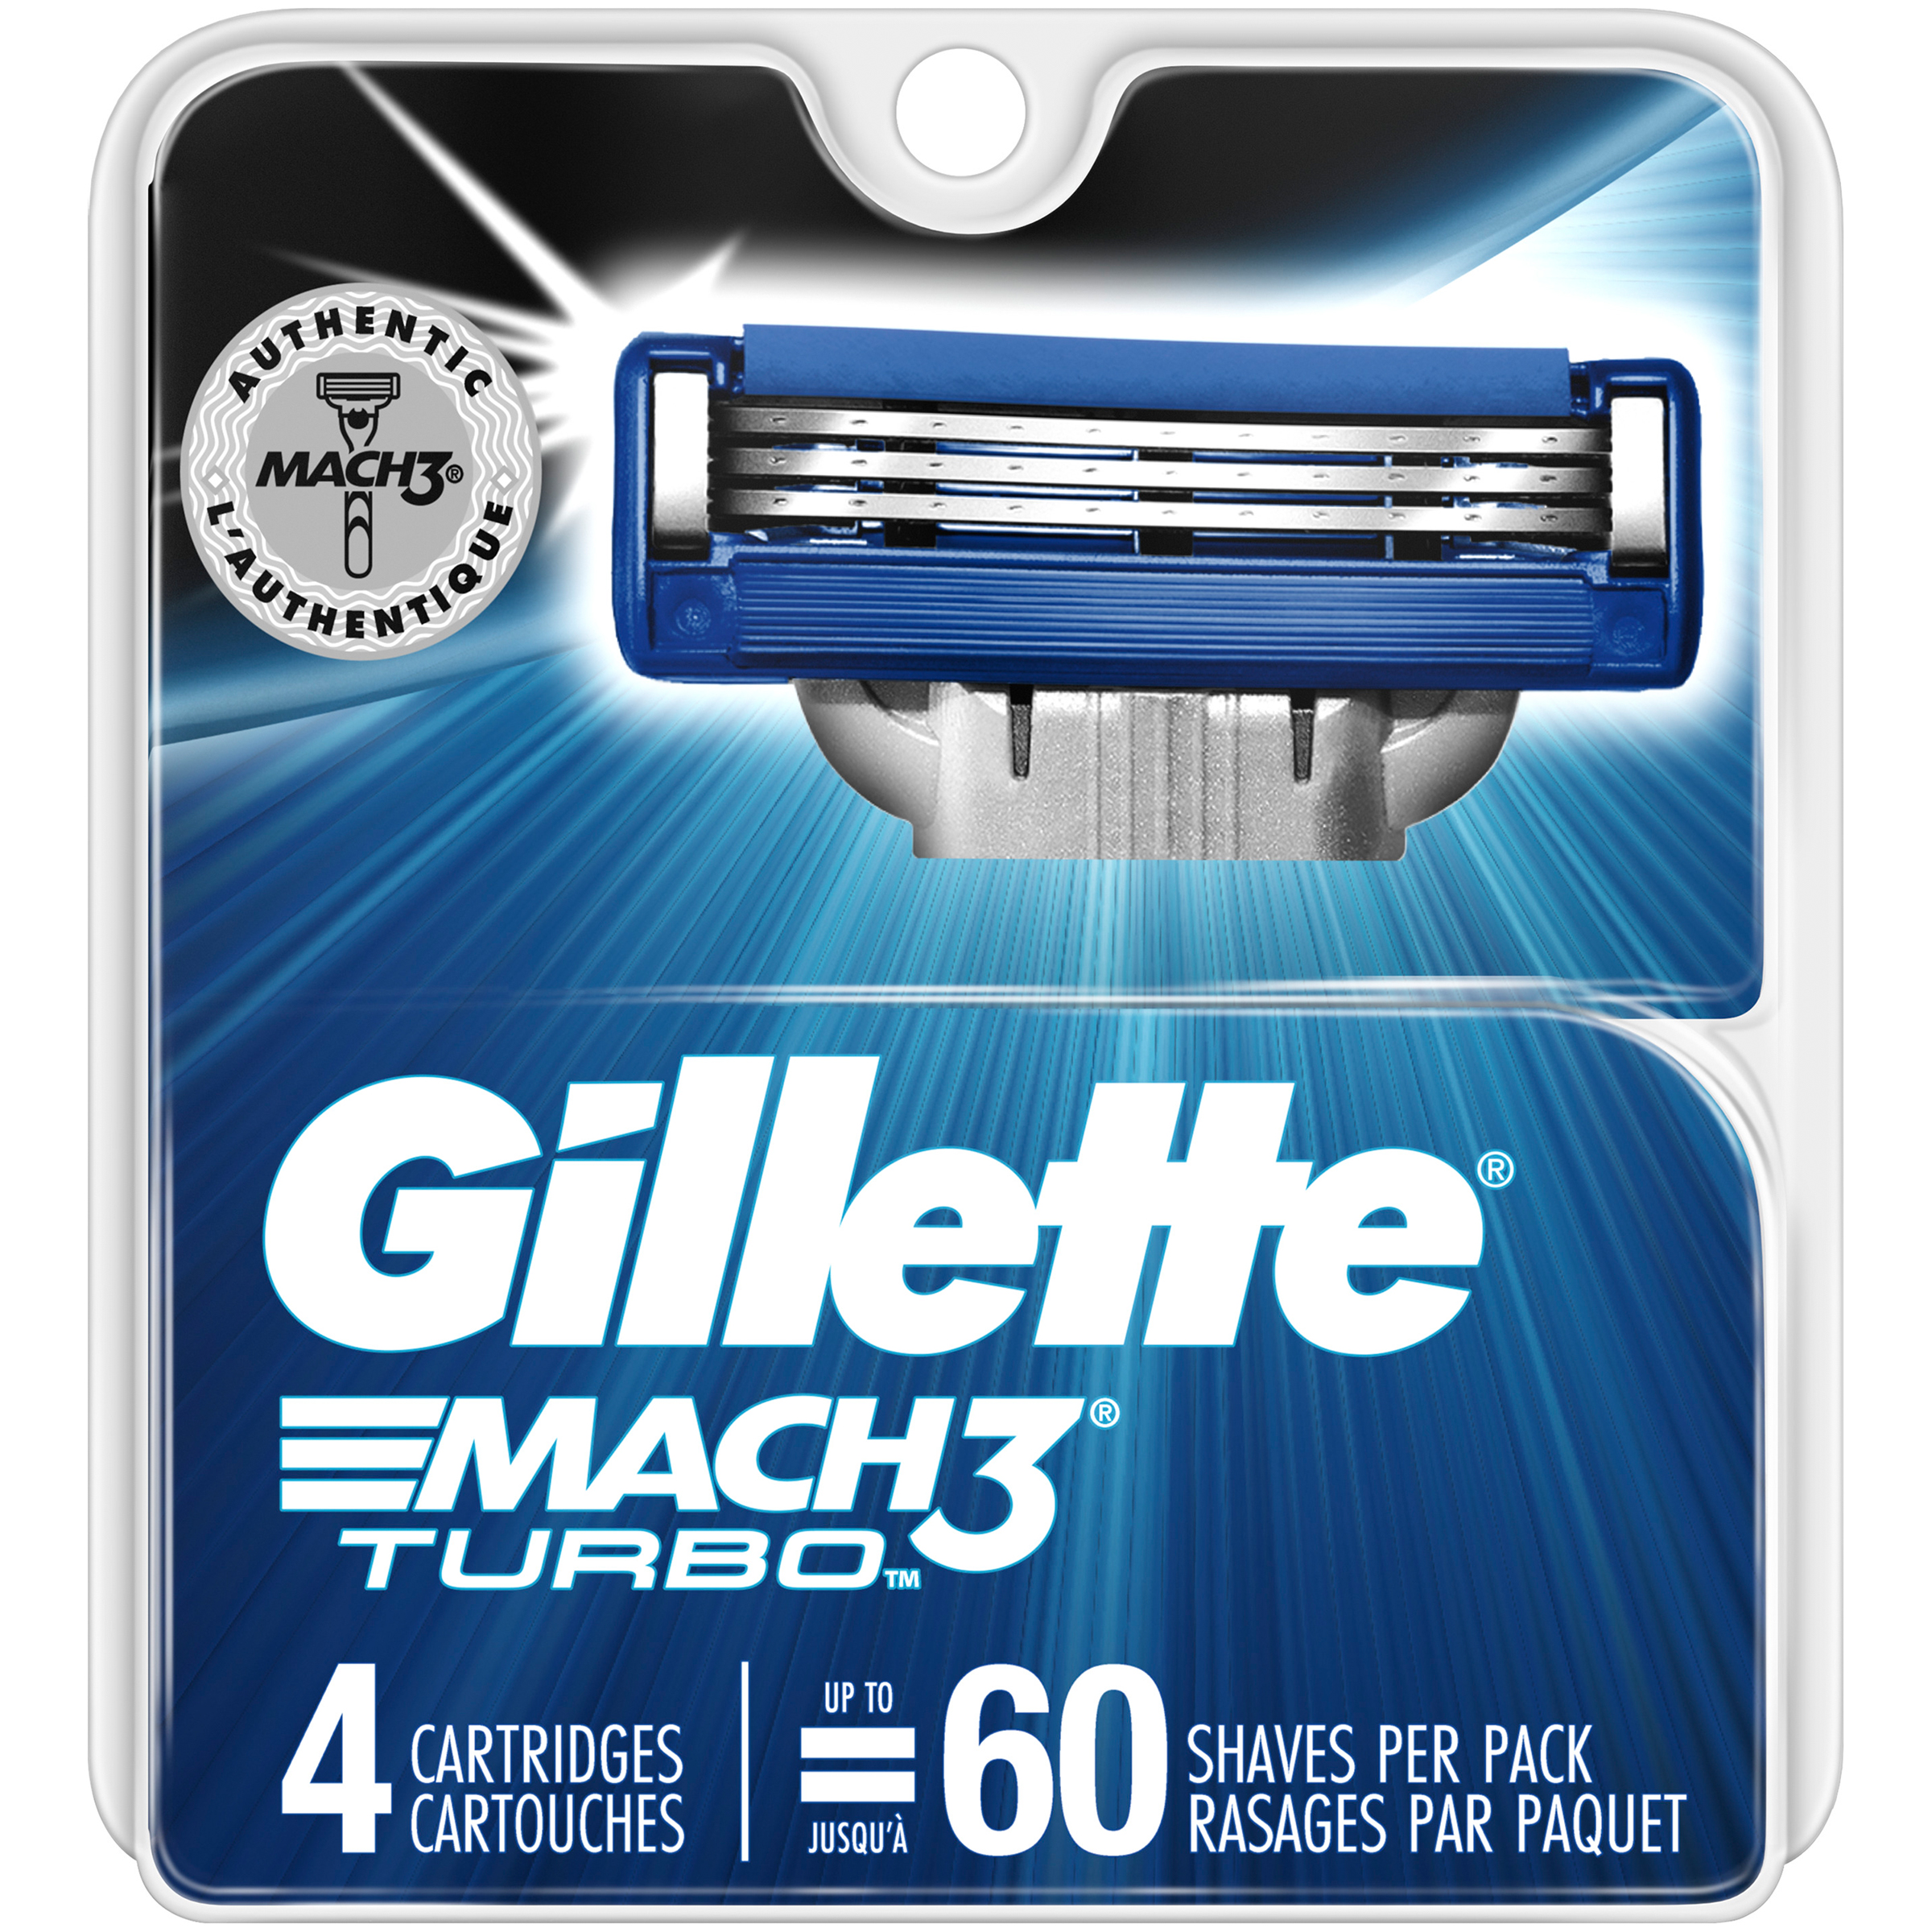 Gillette  Mach3 Turbo Cartridges, 4 Count